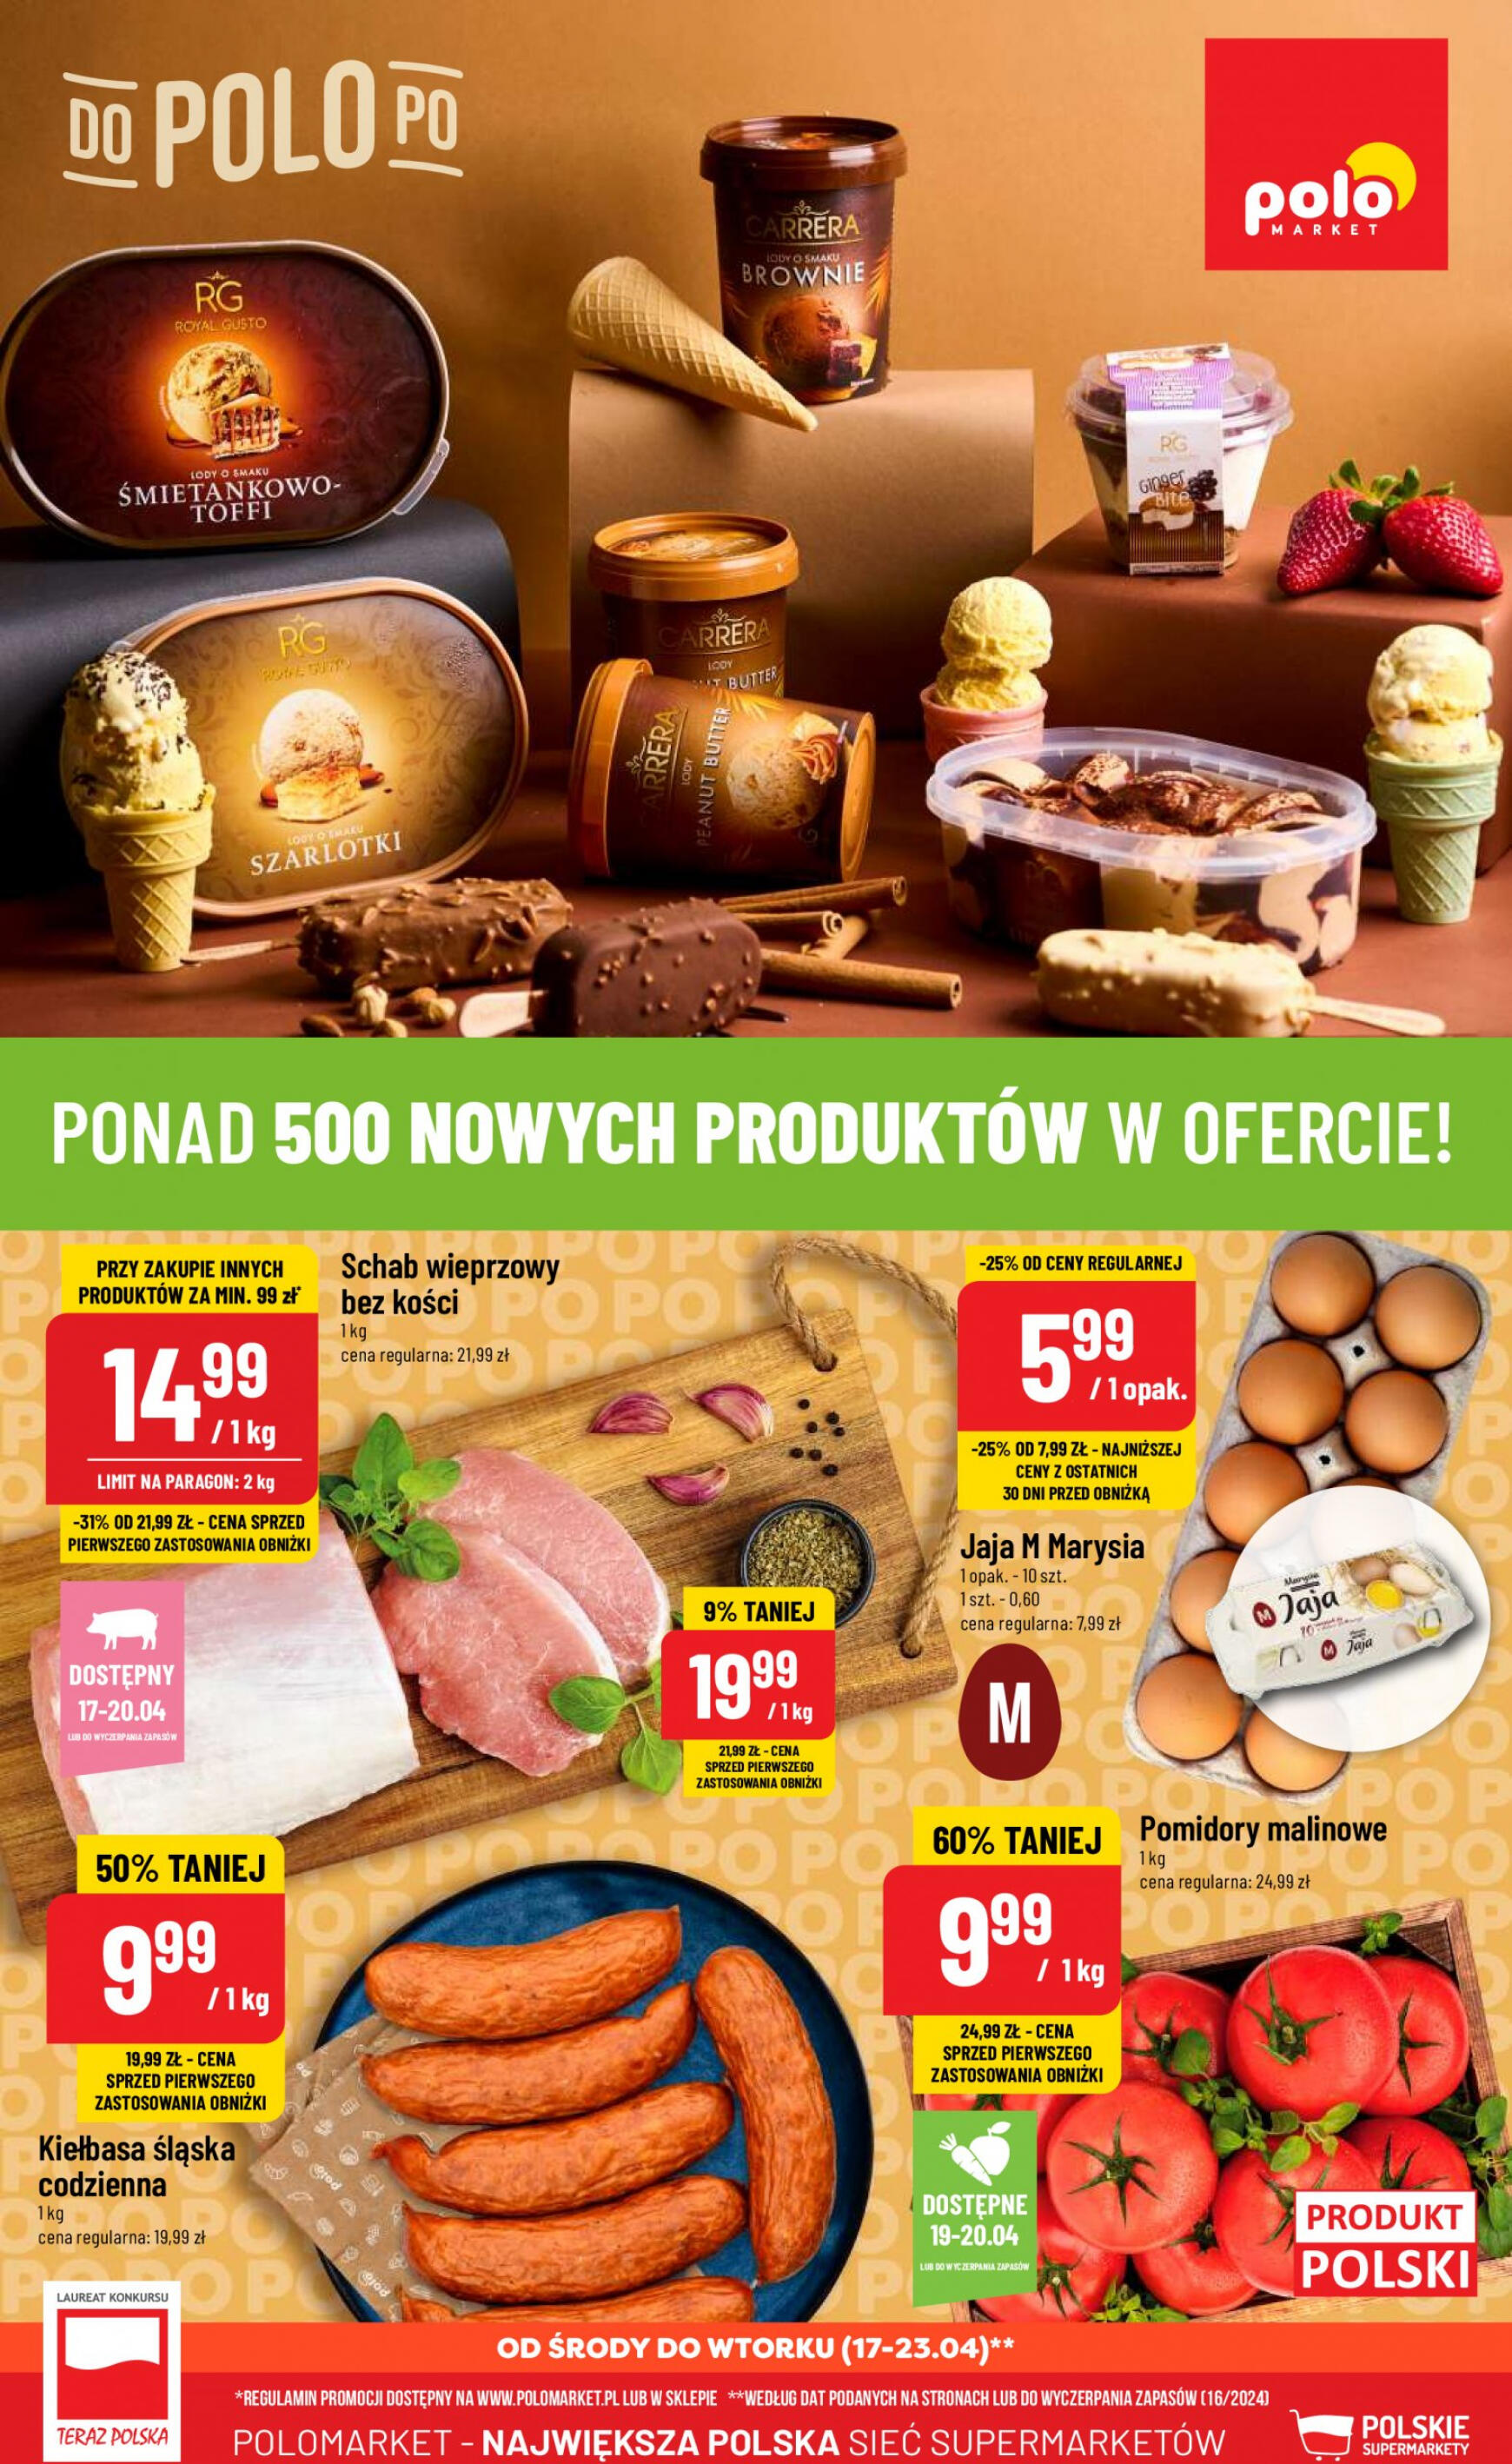 polomarket - POLO market gazetka aktualna ważna od 17.04. - 23.04. - page: 1